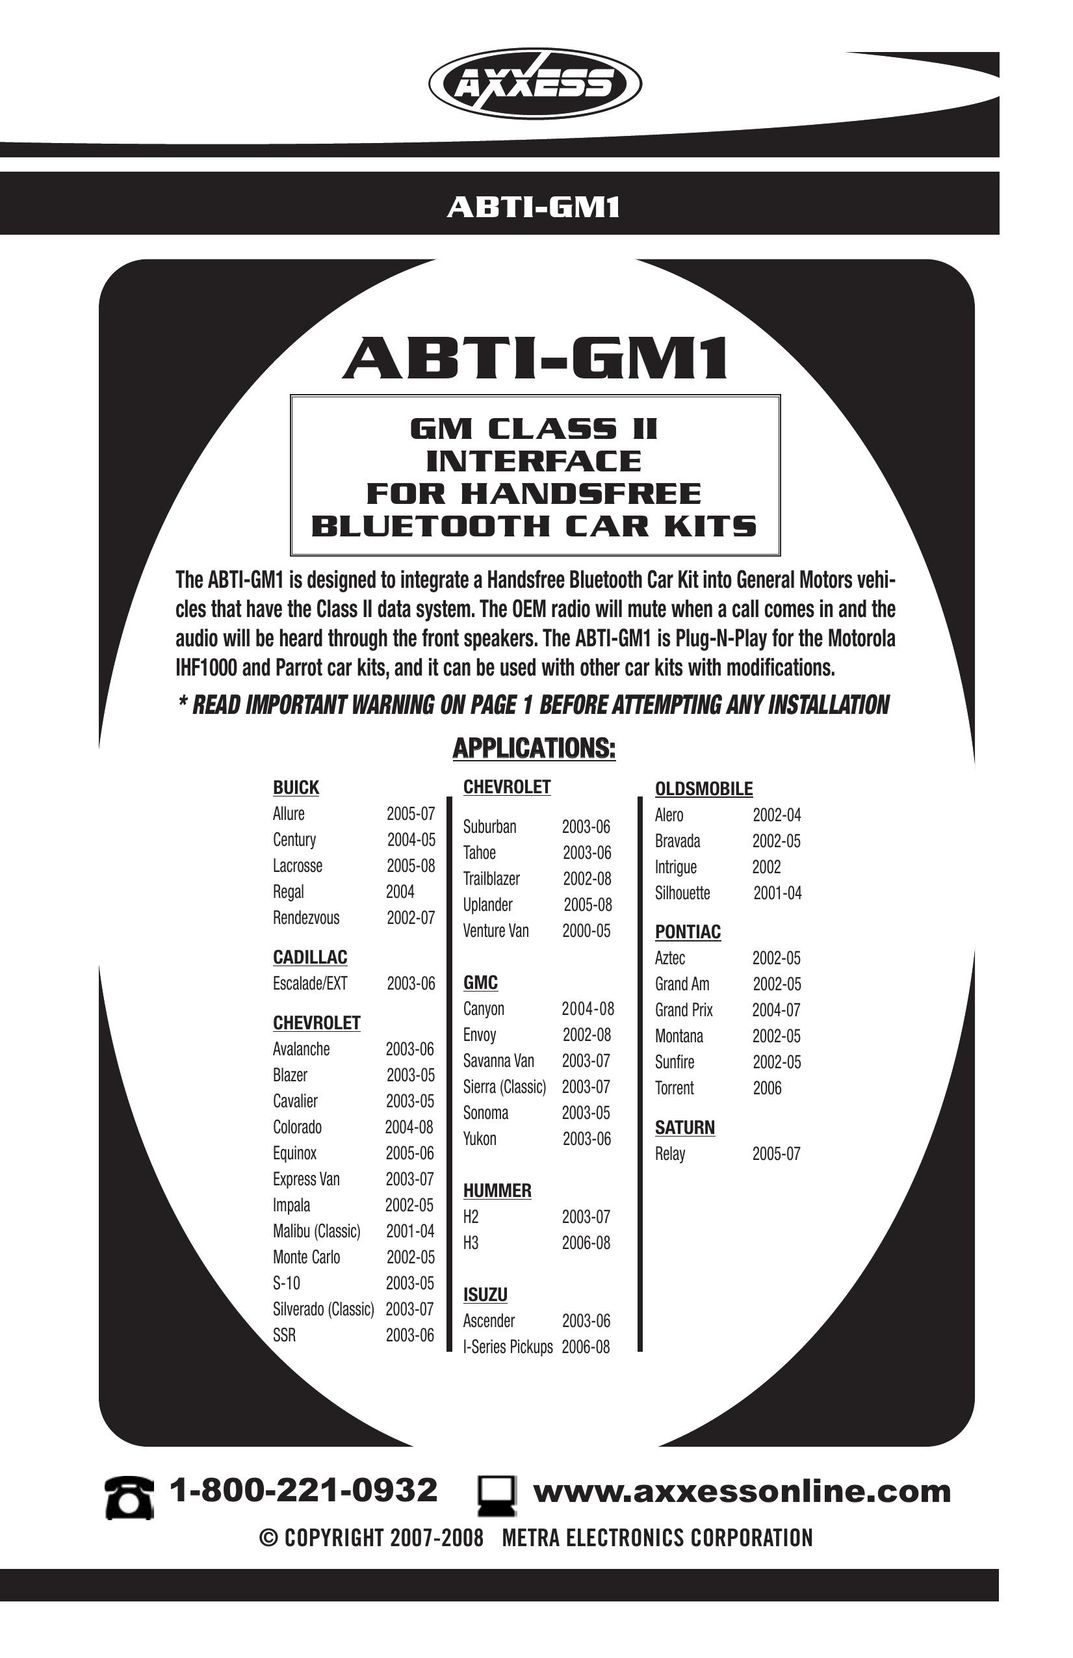 Axxess Interface ABTI-GM1 Bluetooth Headset User Manual (Page 1)